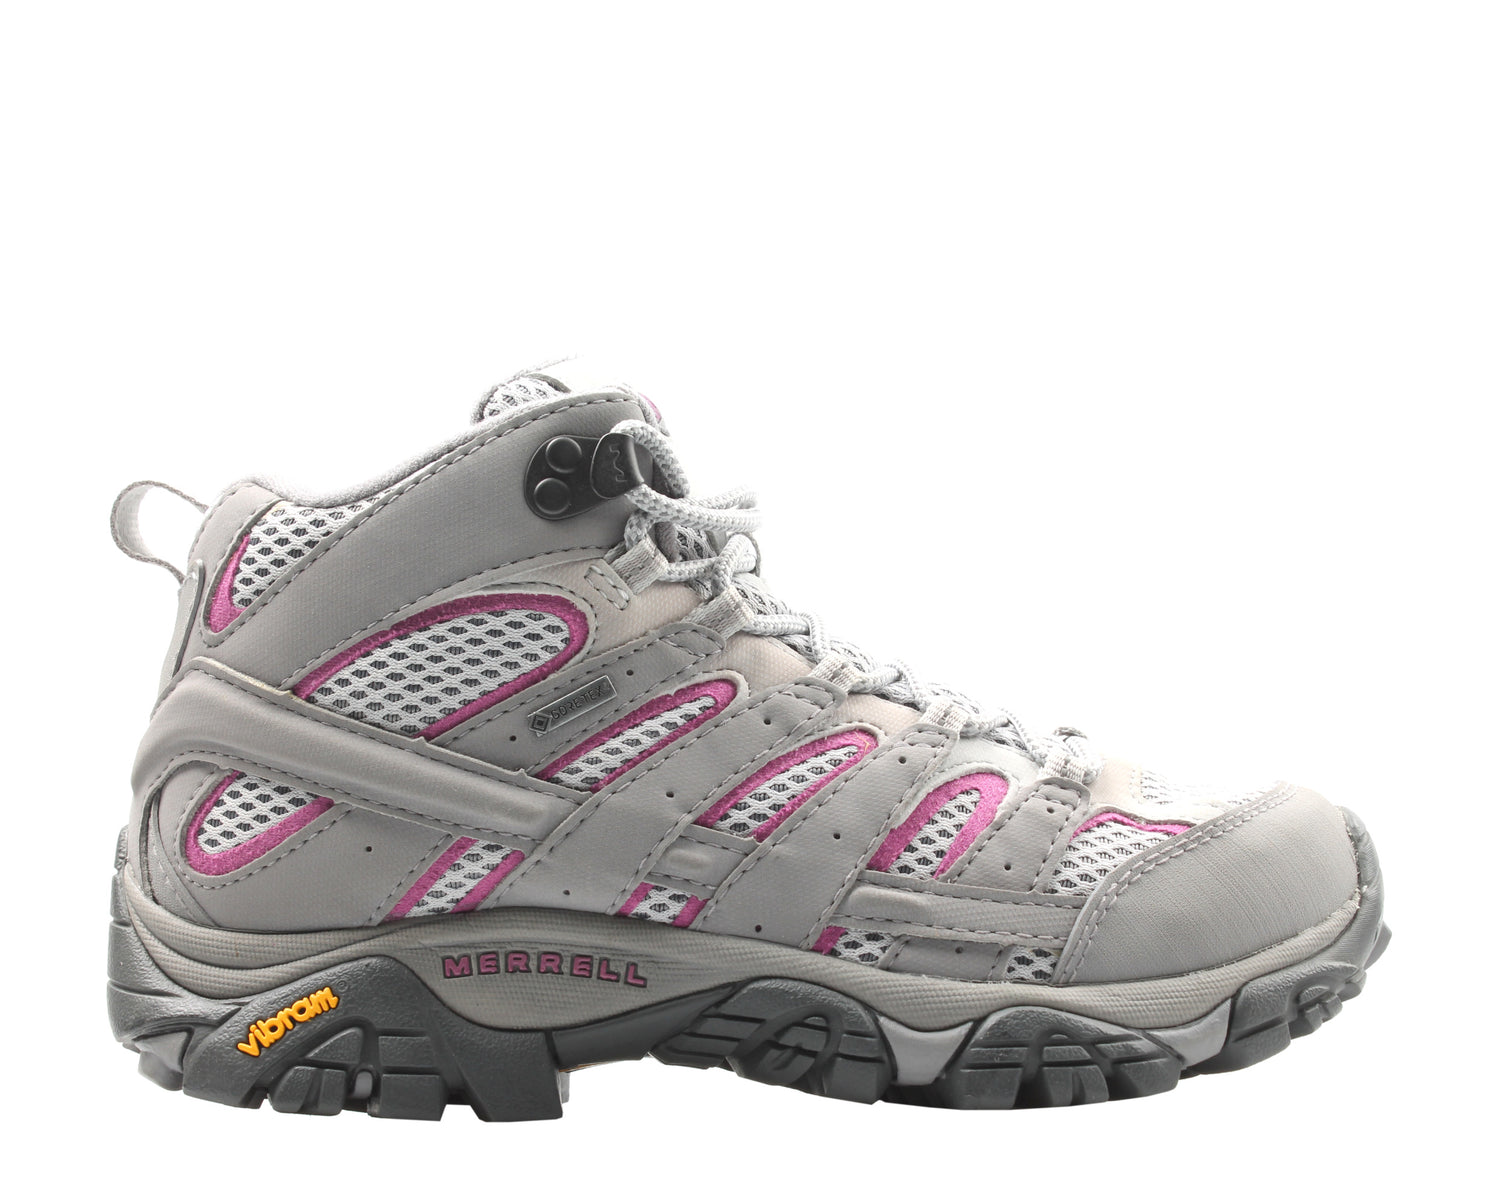 Merrell Moab 2 Mid GORE-TEX Women's Hiking Boots